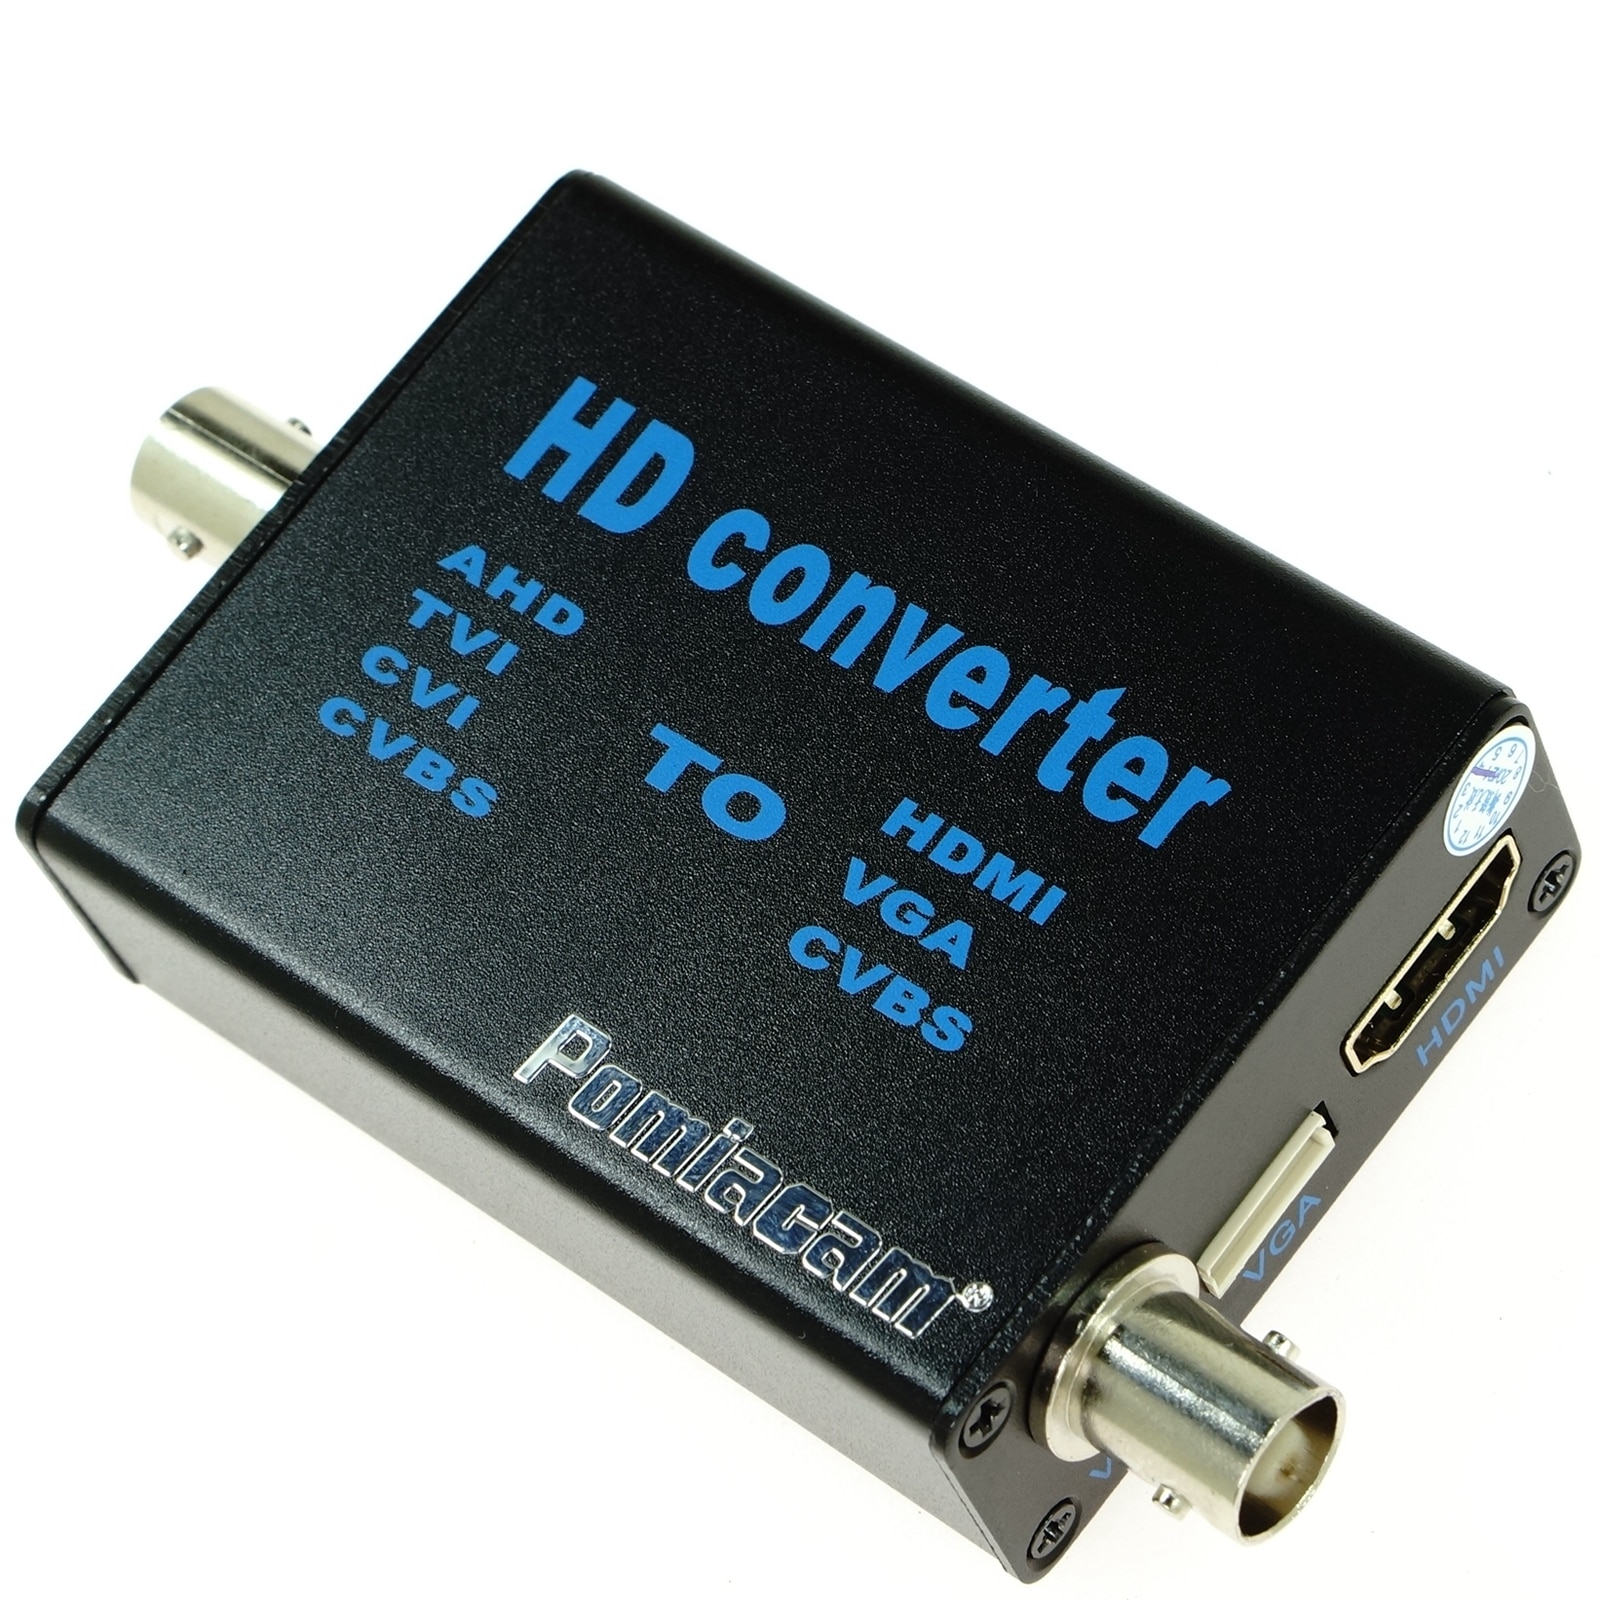 Ahd til hdmi signal konverter vga hdmi 720p 960p 1080p ahd tvi cvi cvbs signal 4- i -1 video converter support til bnc kabel